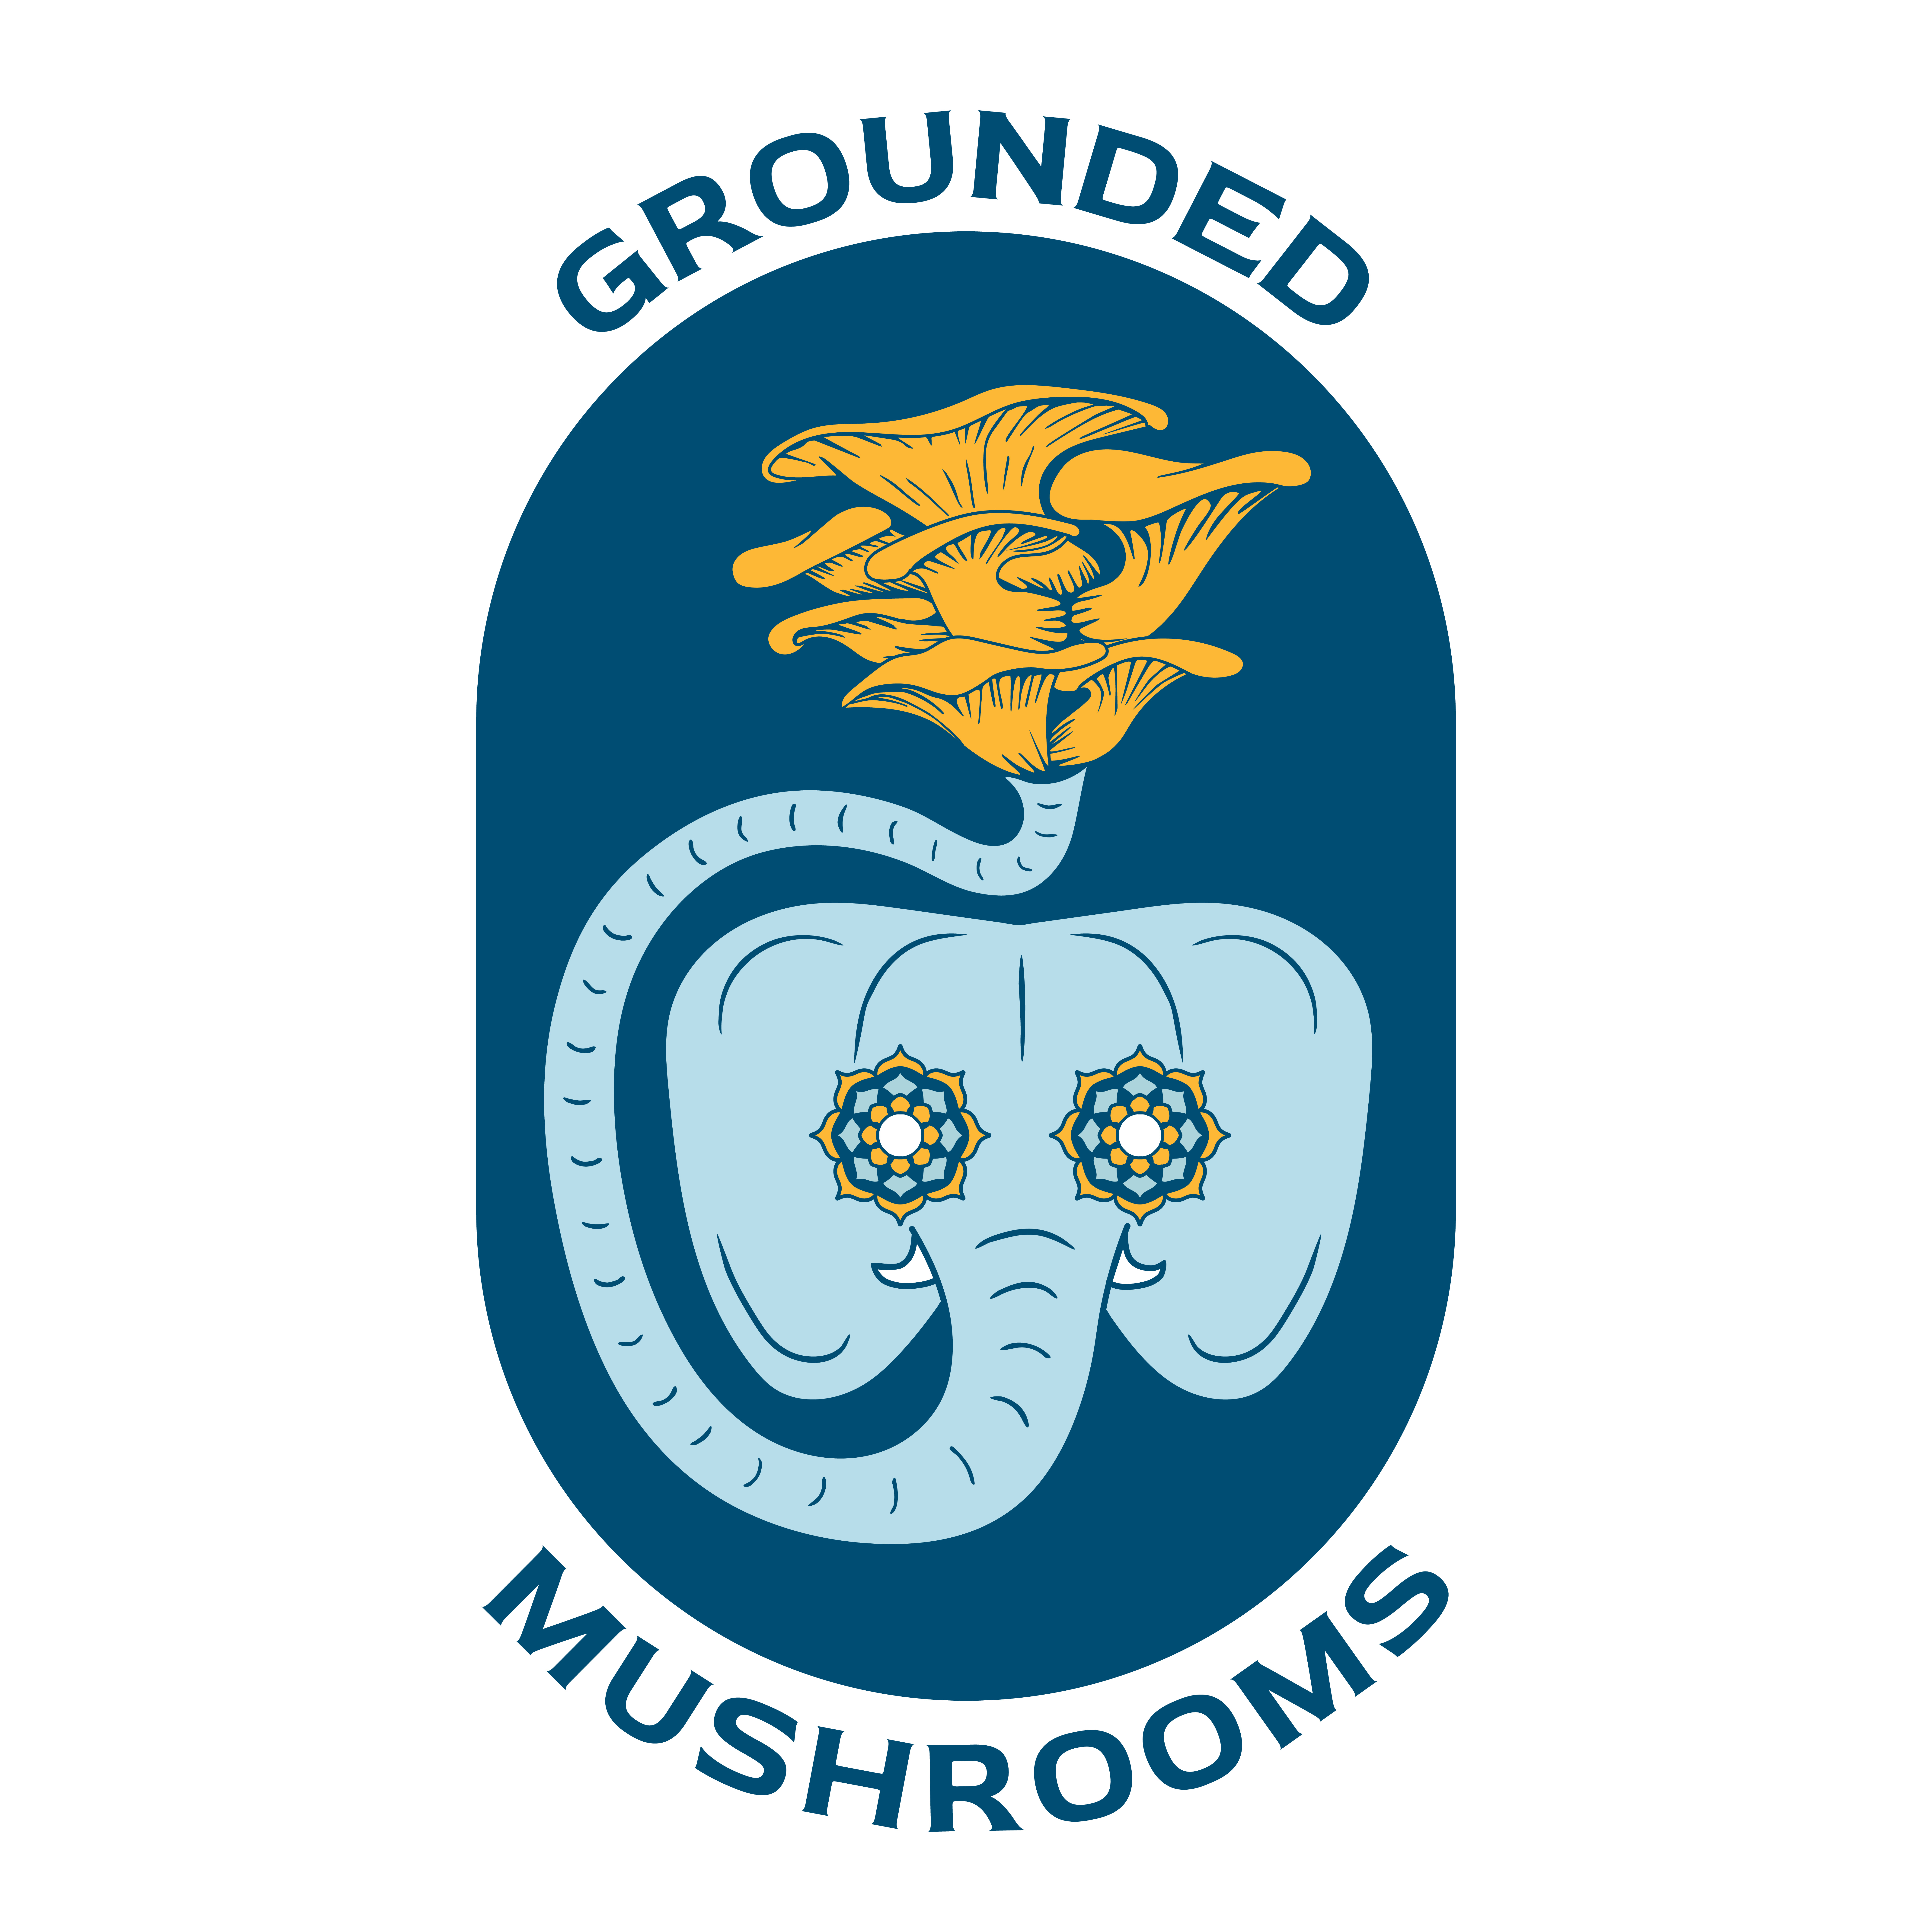 “Meet The Artisan” Dinner Series feat. Grounded Mushrooms